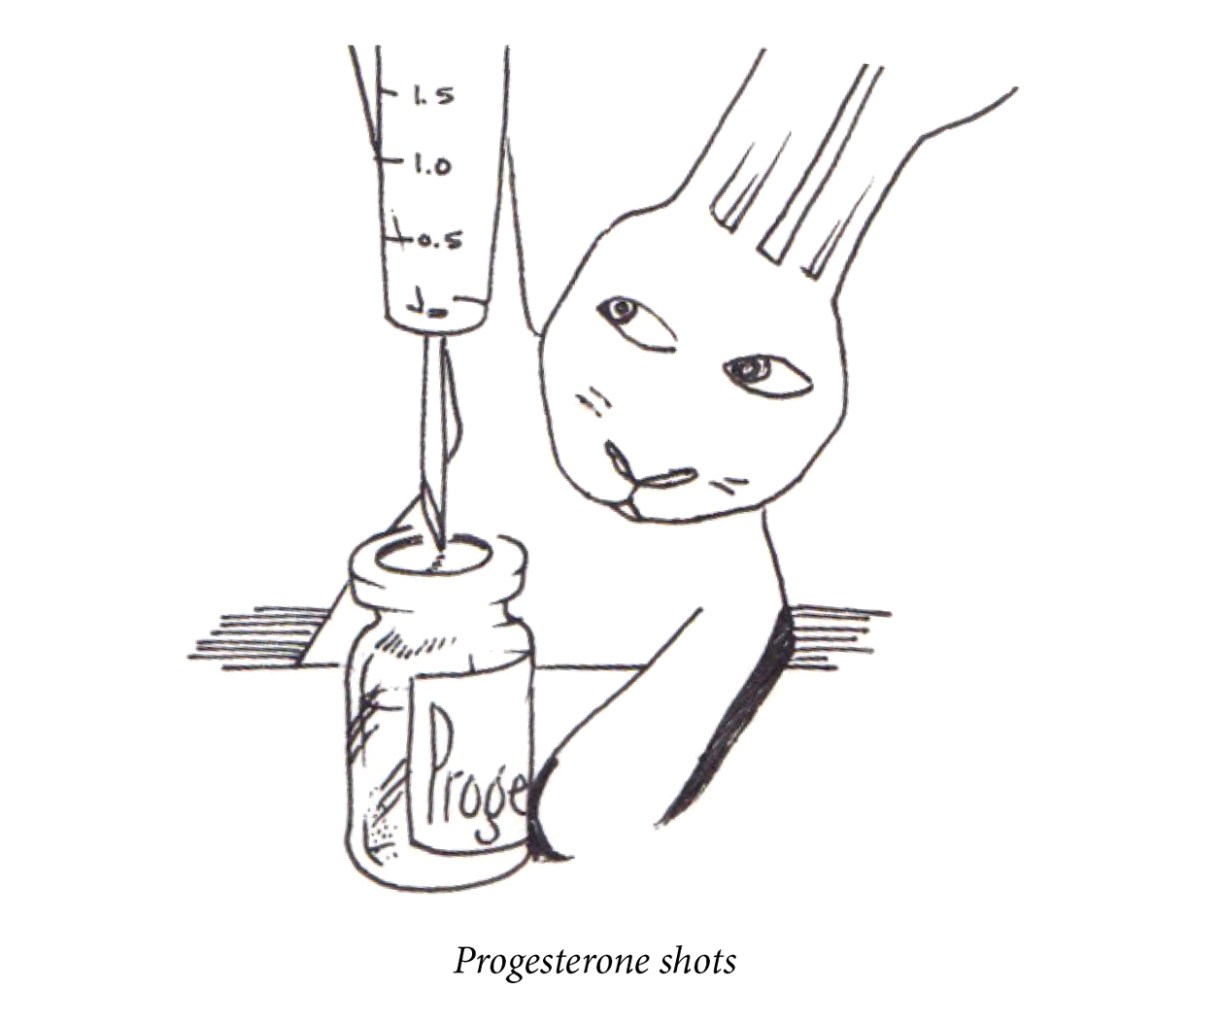 Image description: A rabbit prepared a shot of progesterone. Caption: “Progesterone shots.